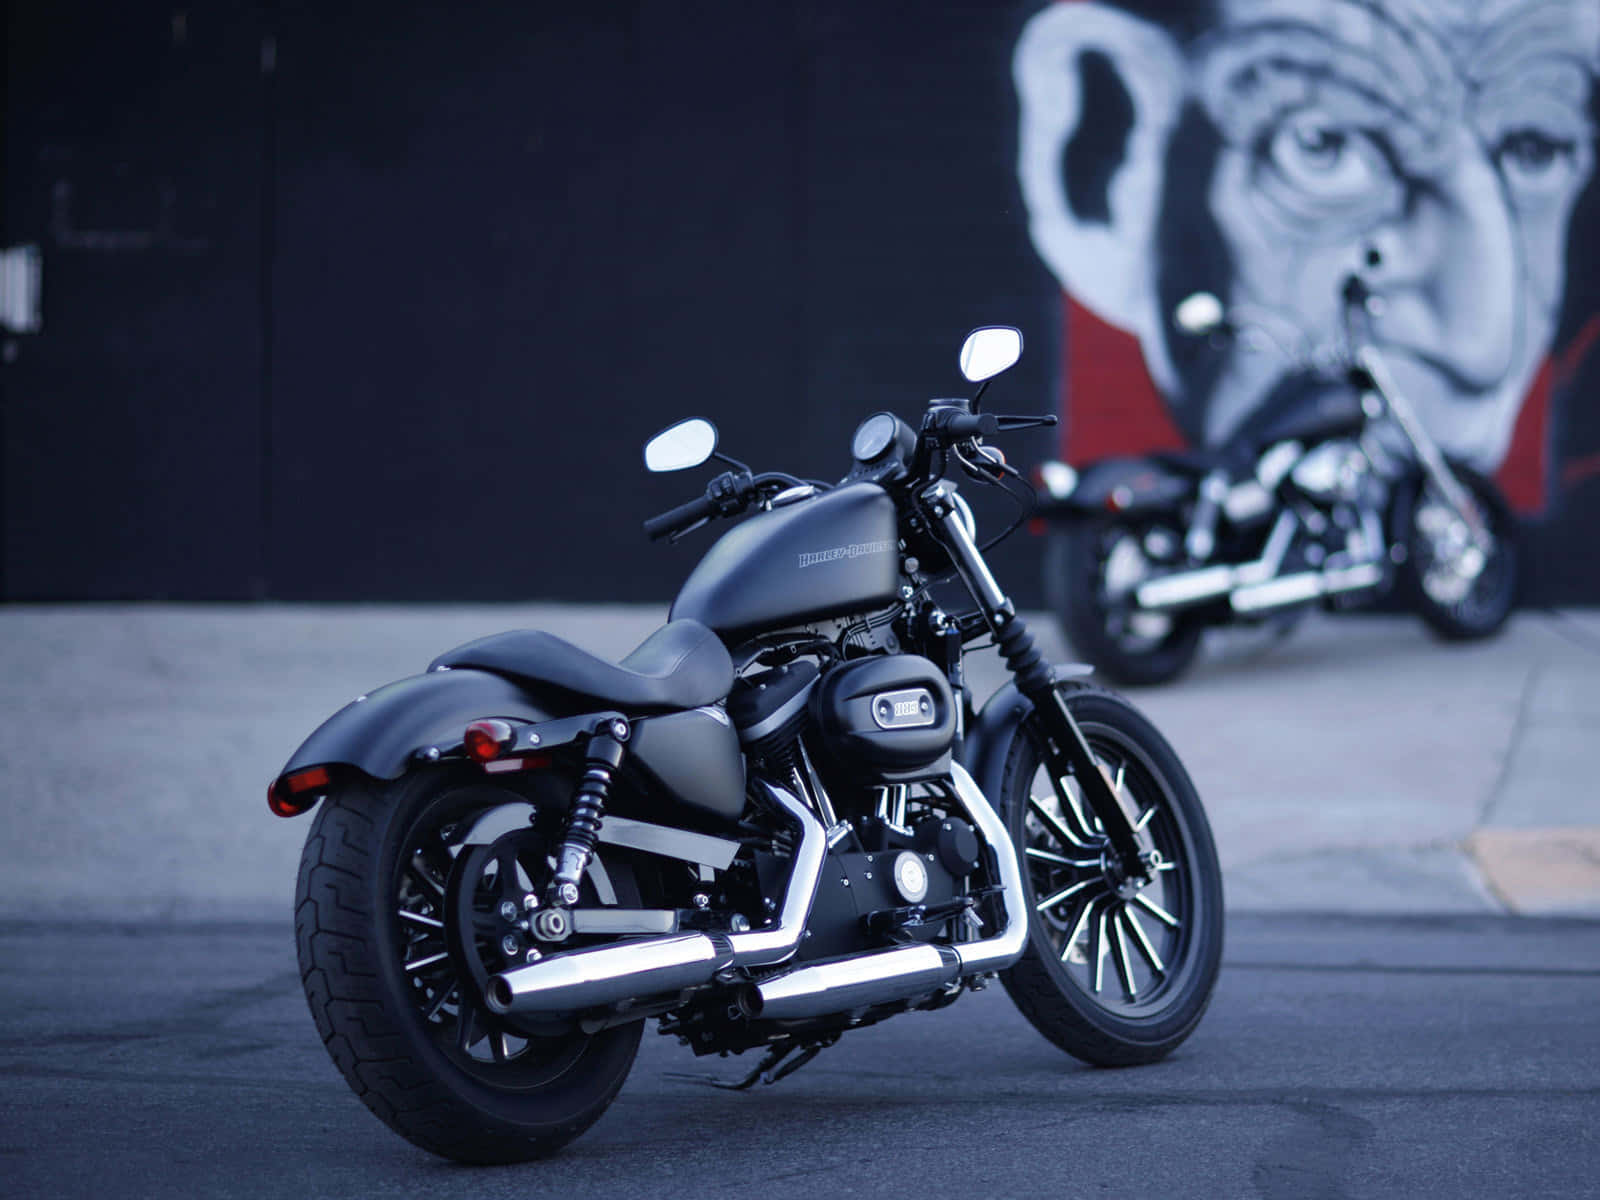 Harley Davidson Iron 883 In San Diego, California Wallpaper